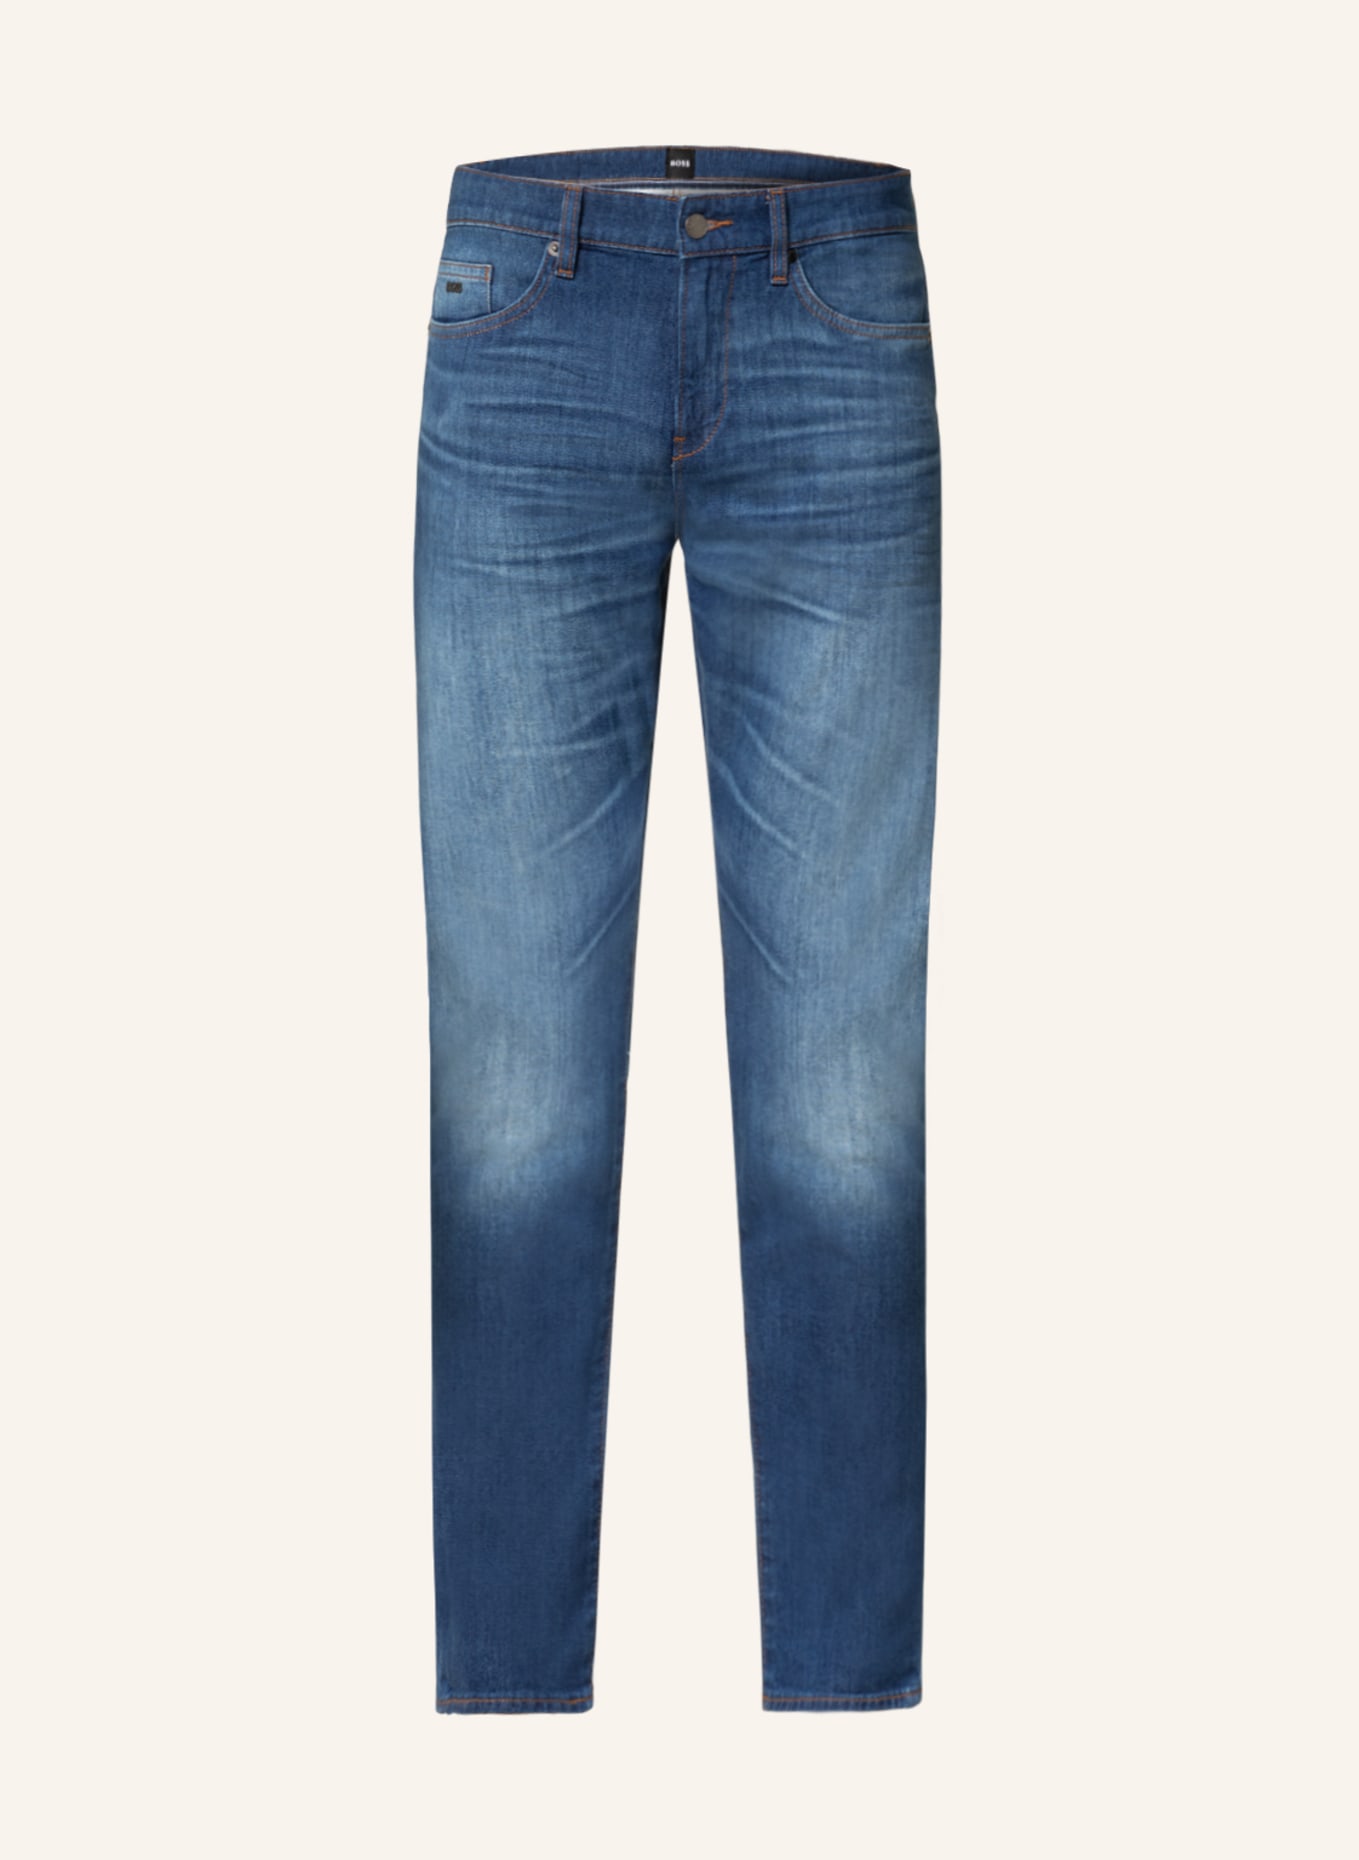 BOSS Jeans DELAWARE Slim Fit, Farbe: 434 BRIGHT BLUE (Bild 1)